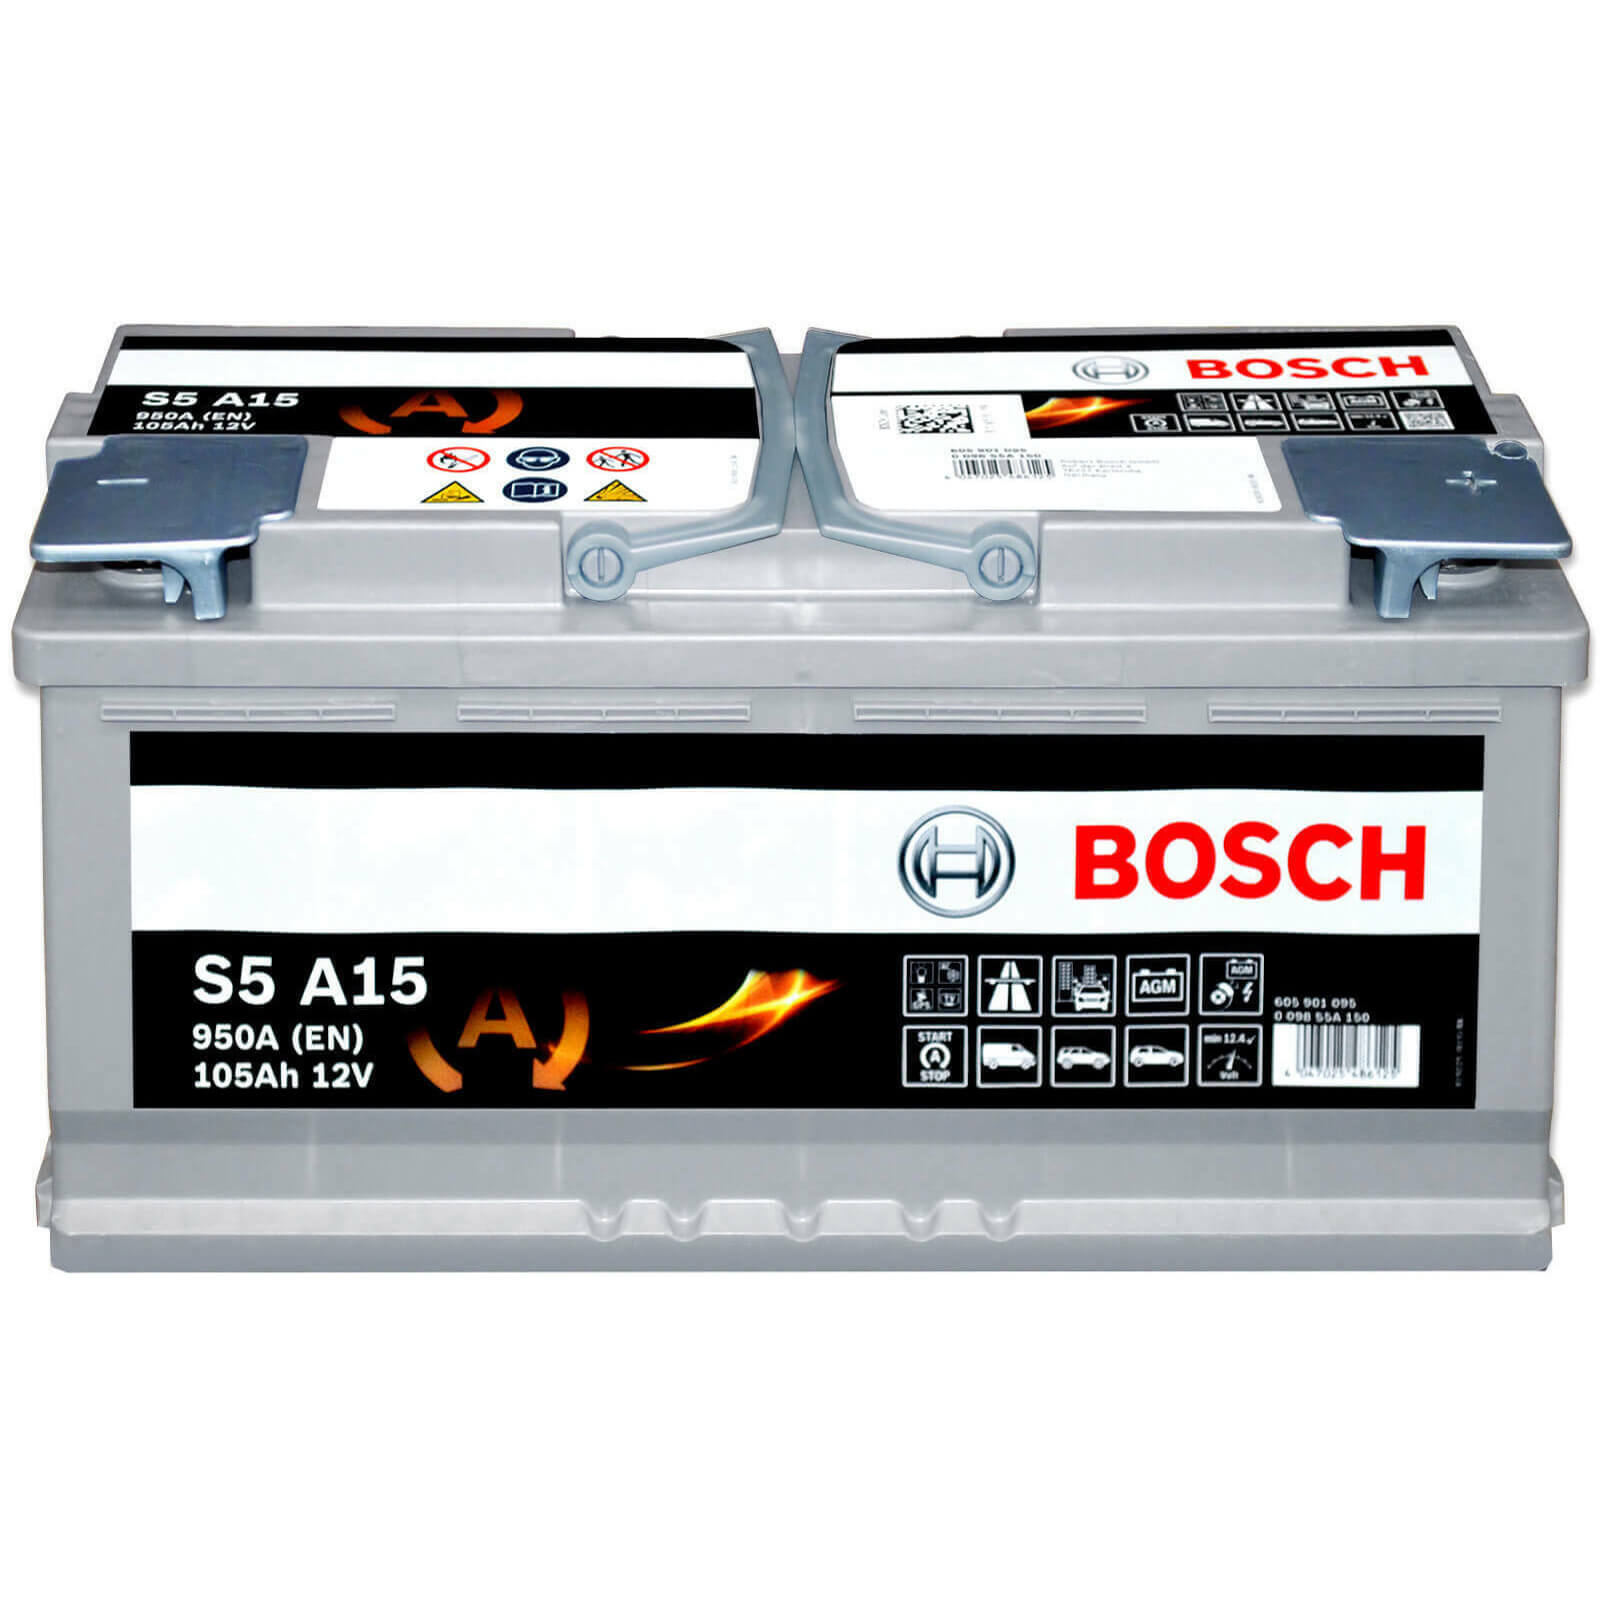 BOSCH S5 Batterie 0 092 S5A 150 12V 105Ah 950A B13 AGM-Batterie S5 A15, 12V  105AH 950A